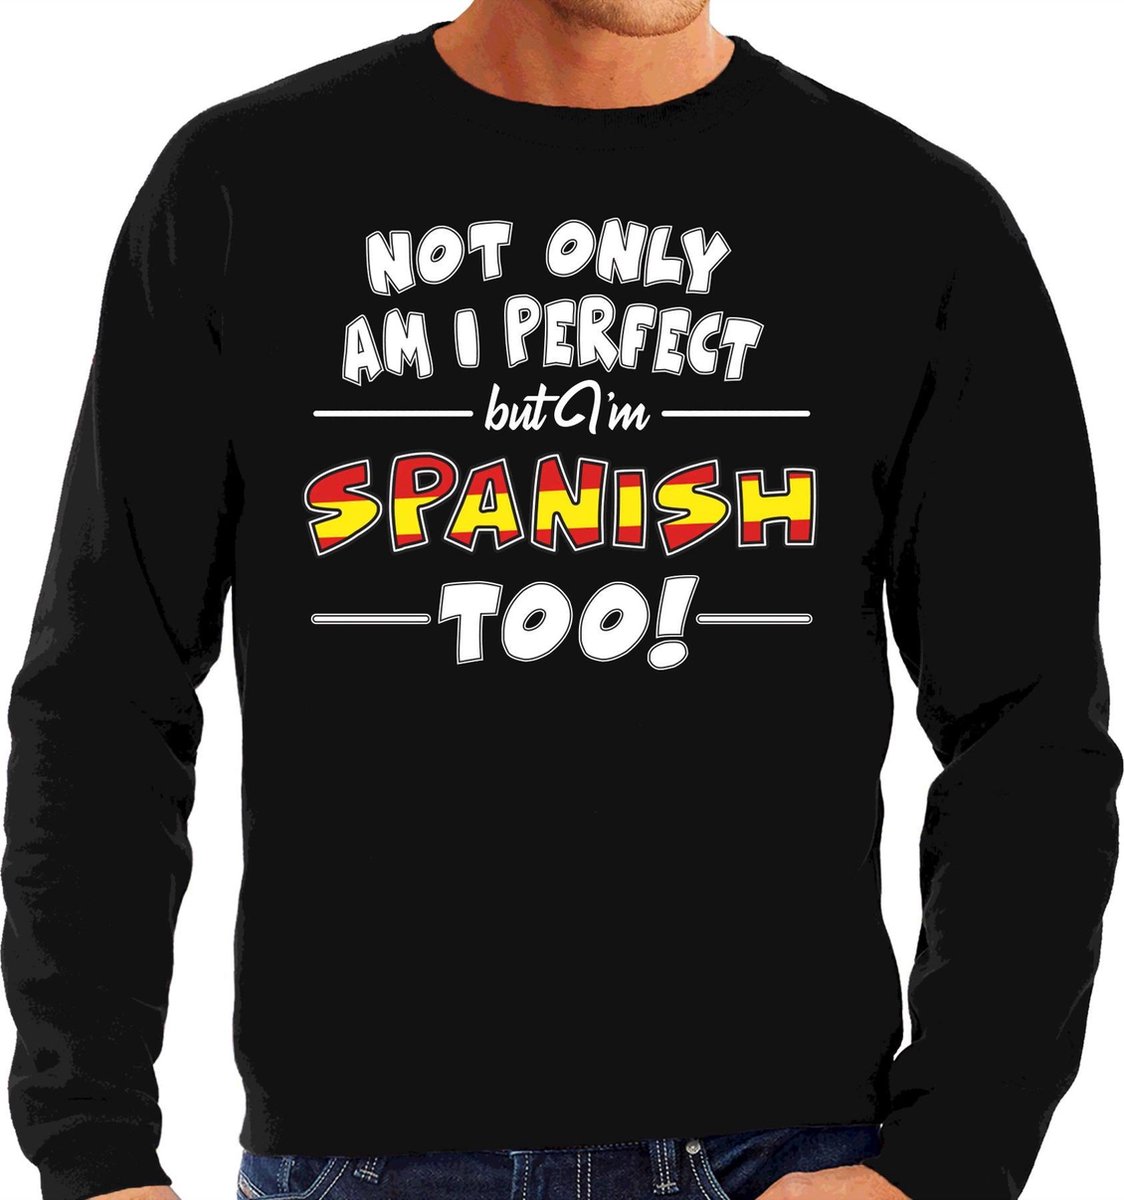 Not only am I perfect but im Spanish / Spaans too sweater - heren - zwart - Spanje cadeau trui XL